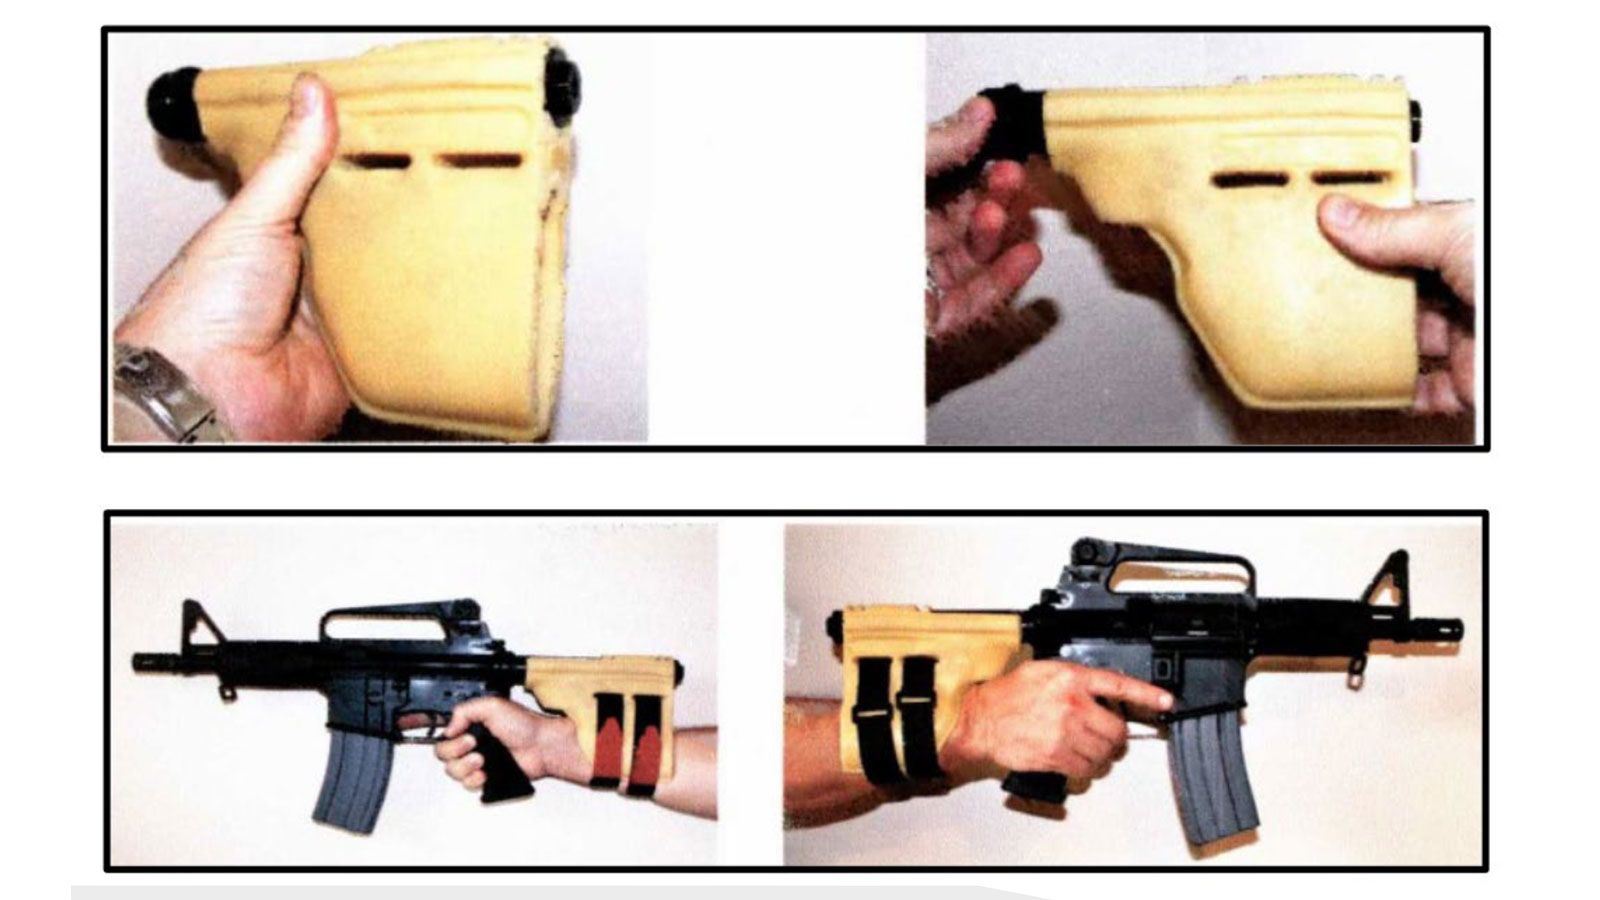 https://media.cnn.com/api/v1/images/stellar/prod/230209154529-atf-pistol-stabilizing-braces.jpg?c=original